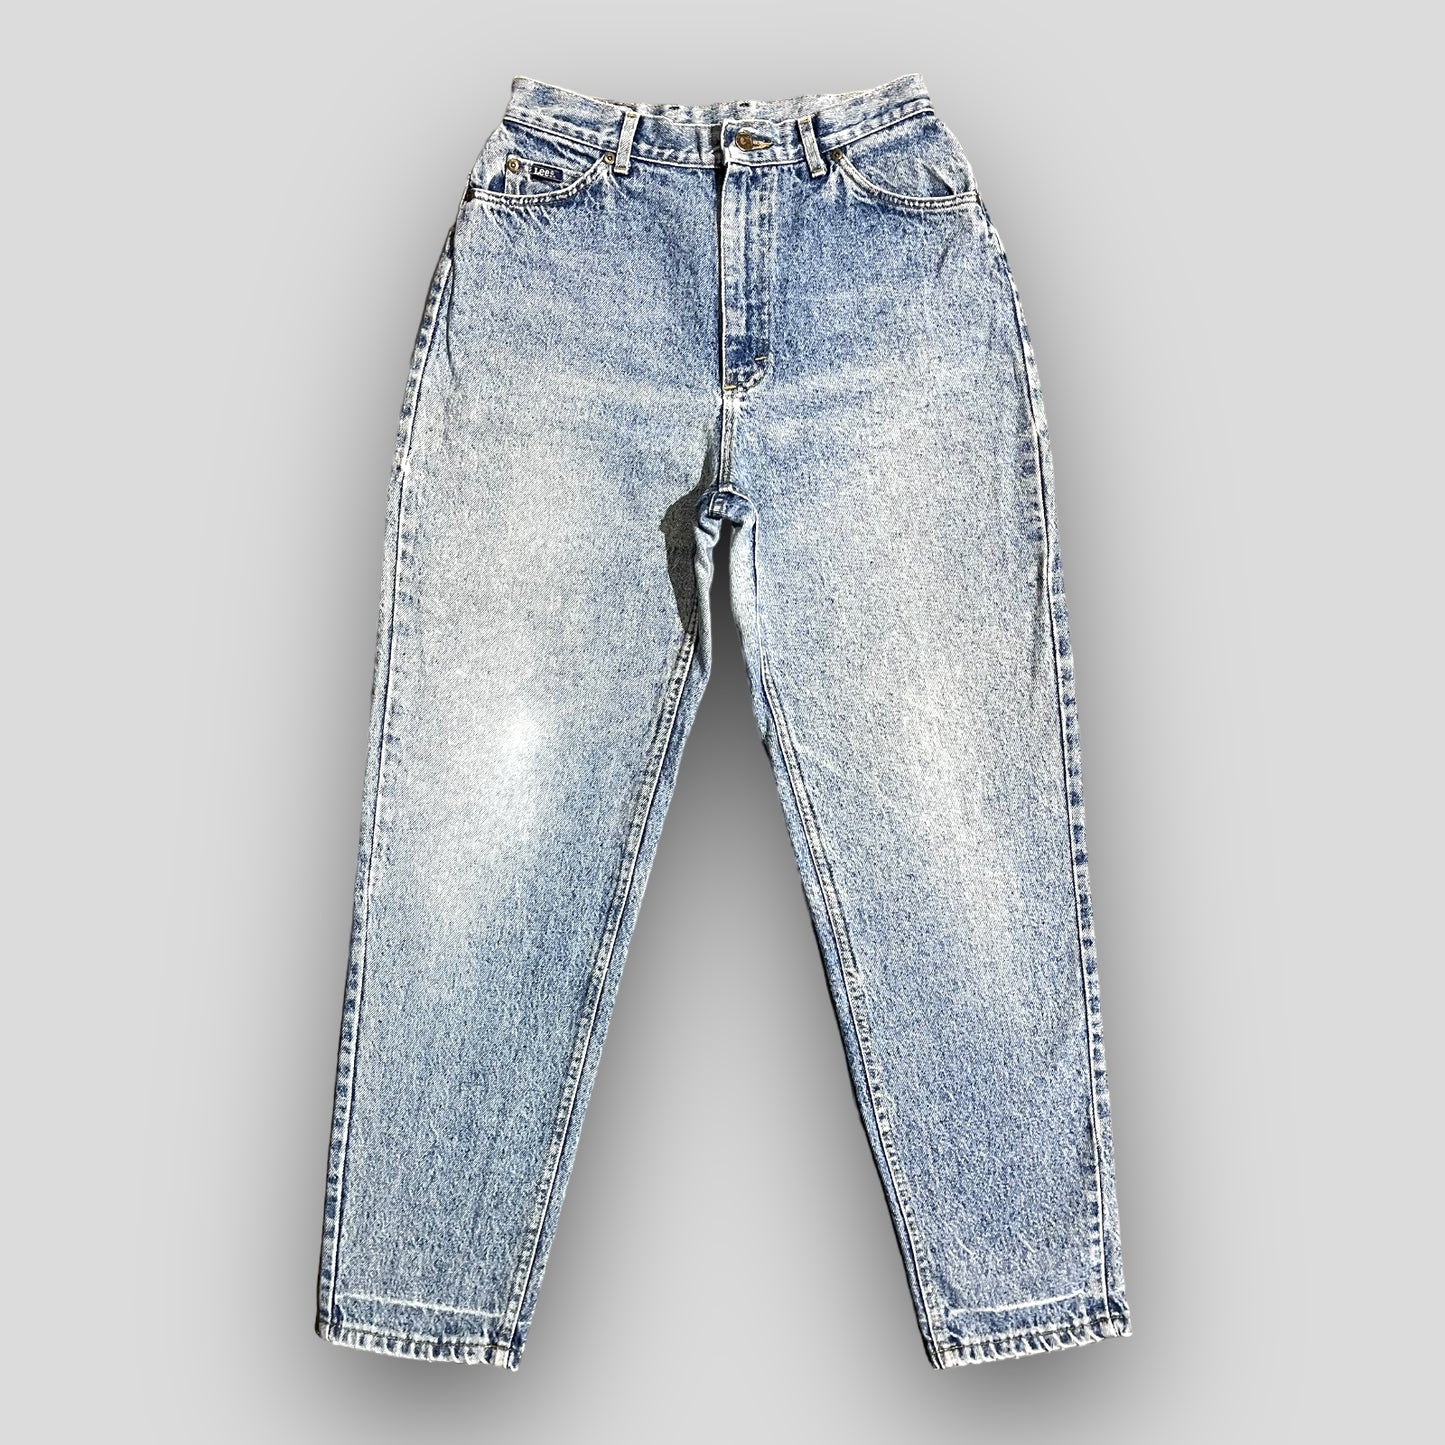 VINTAGE LEE RIDERS Denim Jeans / Regular Stonewash / Urban / Worn in  Student Fit / Boho Hipster / Preppy Skater / Surf / Beach Bum / Spring -   Denmark